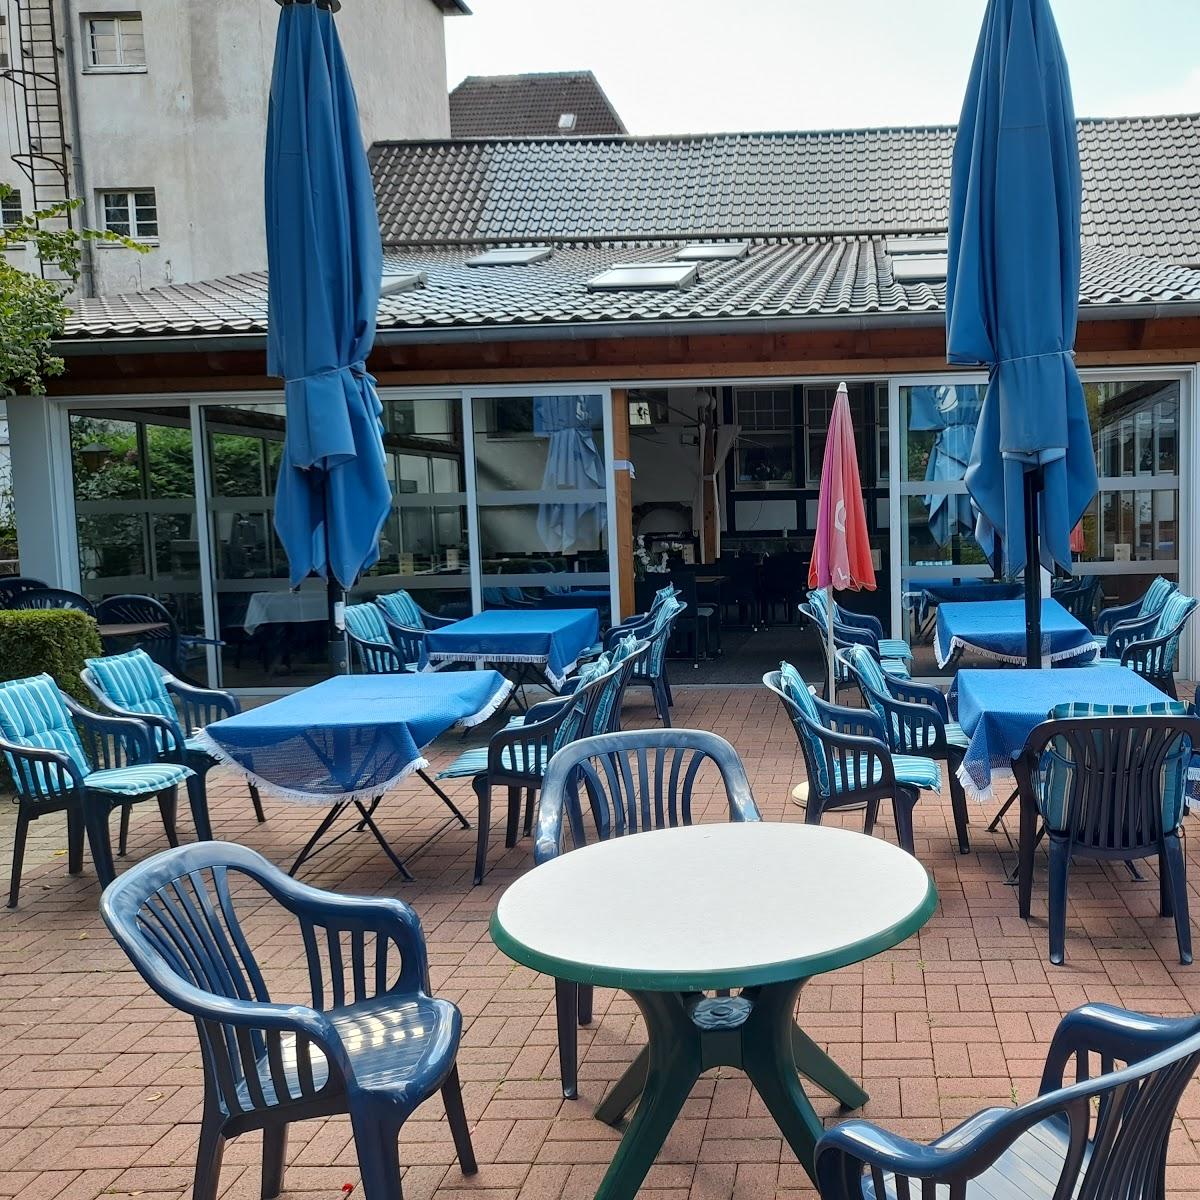 Restaurant "Café – Restaurant Rosengarten" in  Hagen